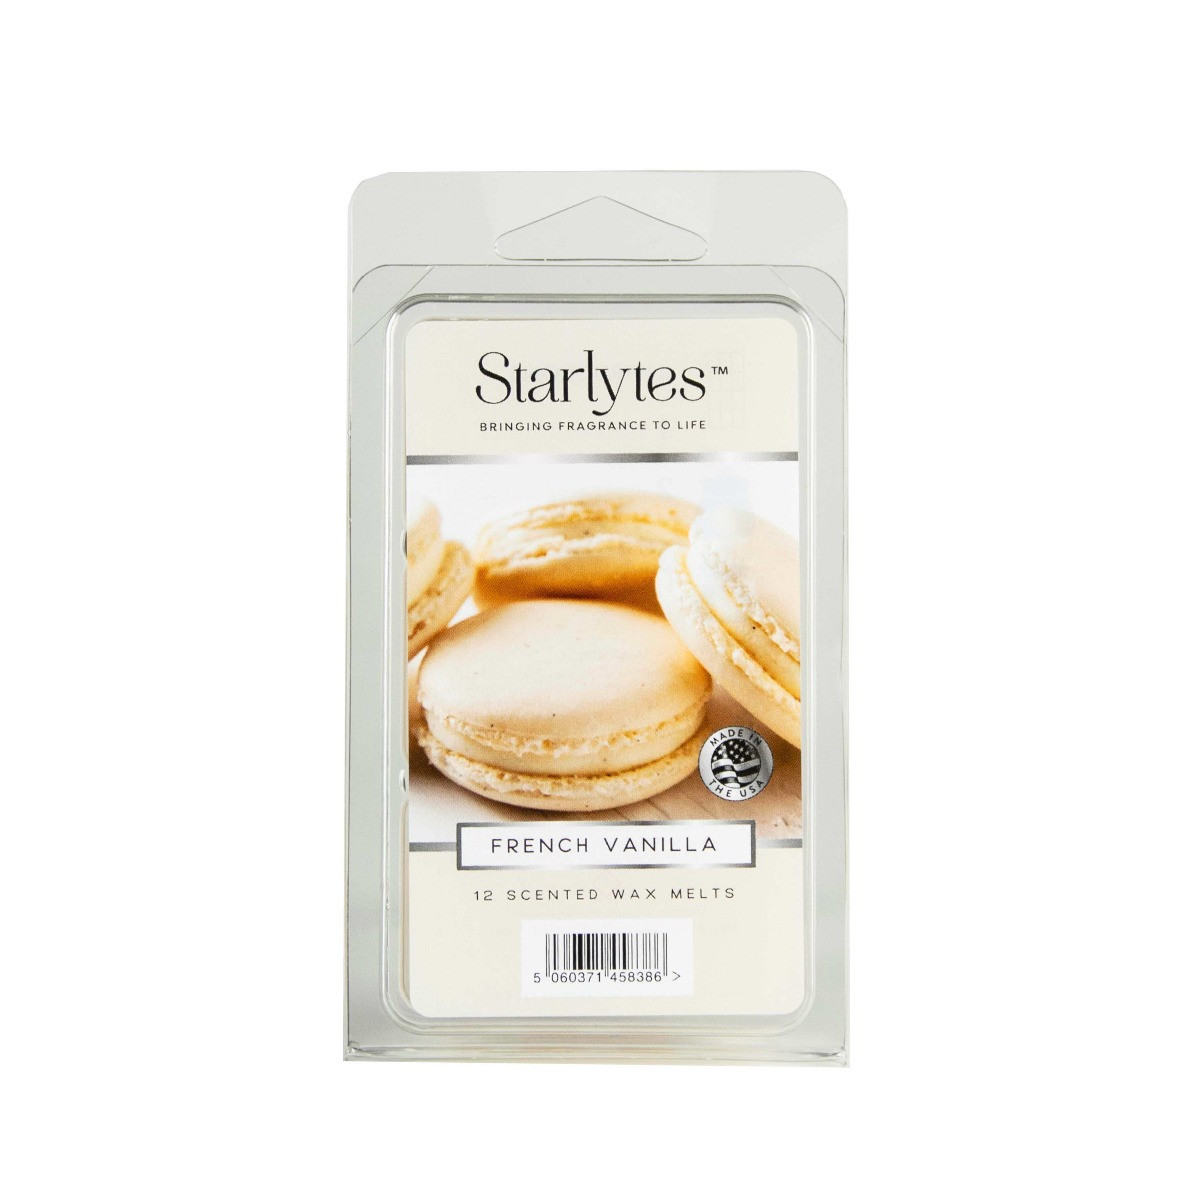 Starlytes Wax Melts 12 Pack - French Vanilla >